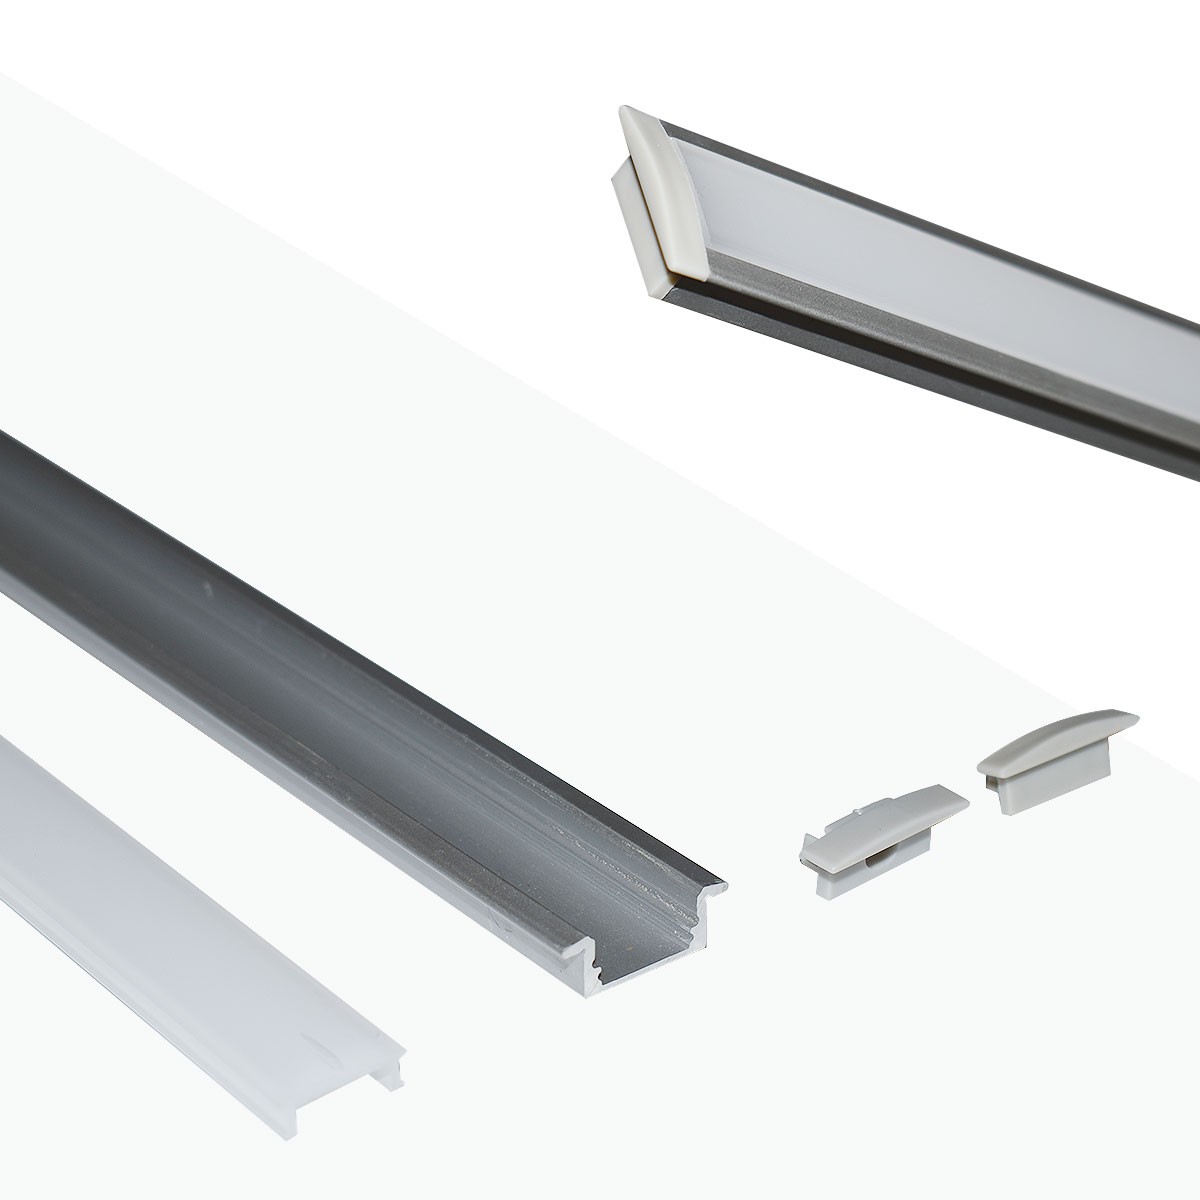 Comprar Perfil aluminio con difusor de superficie para tiras led 2 metros  lpsup01. Precio de oferta